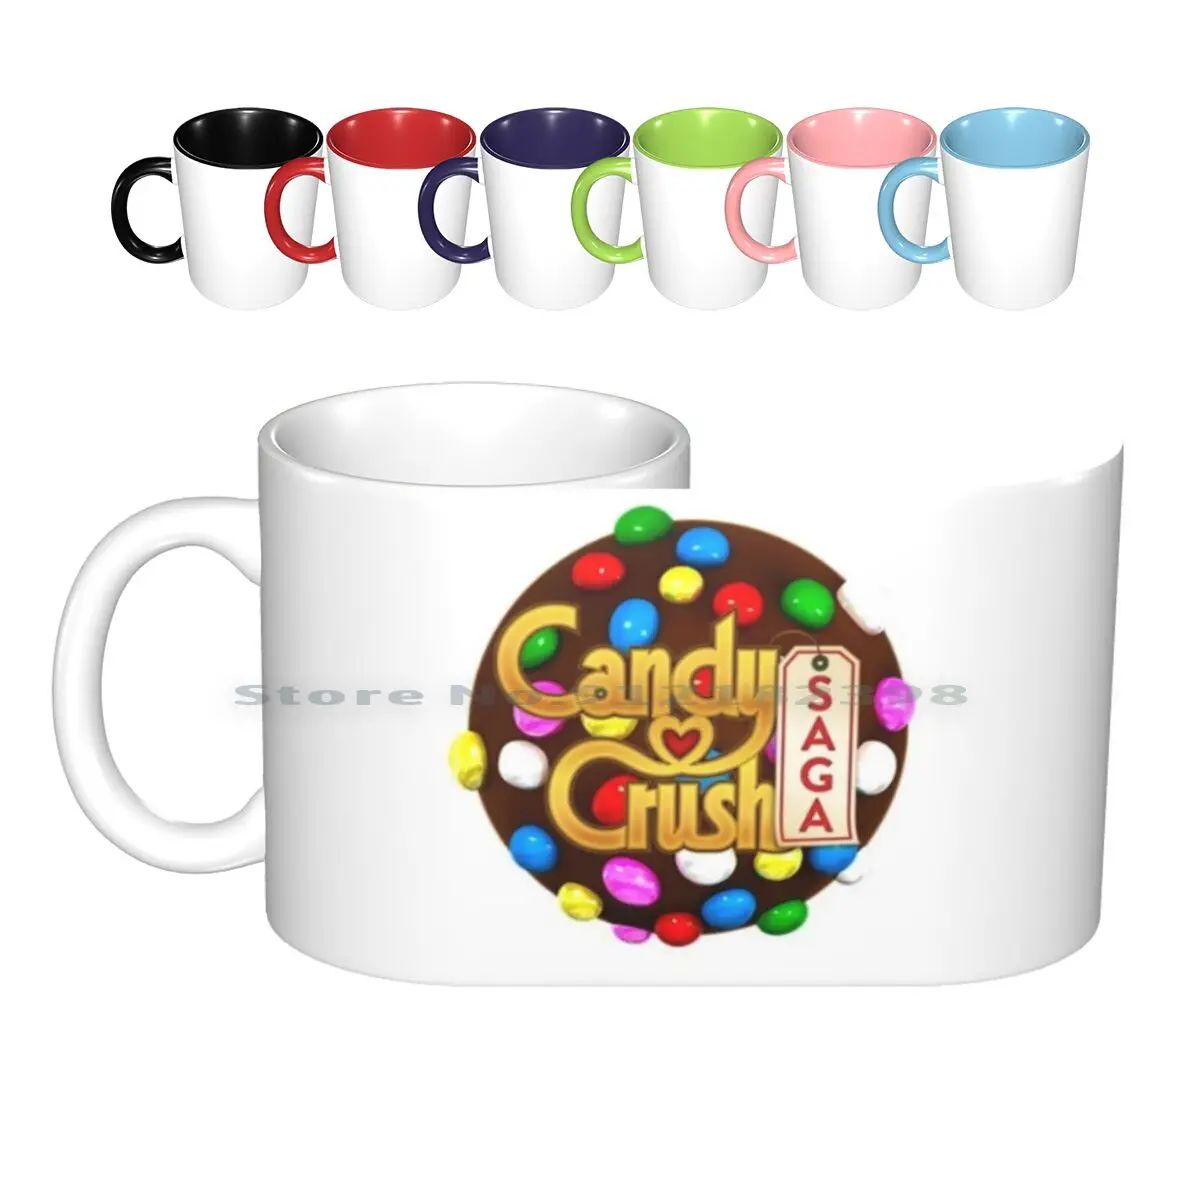 Candy Crush Saga Game Ceramic Mugs Coffee Cups Milk Tea Mug Candy Crush Saga Candy Crush Phone Android Game Ios Market Play